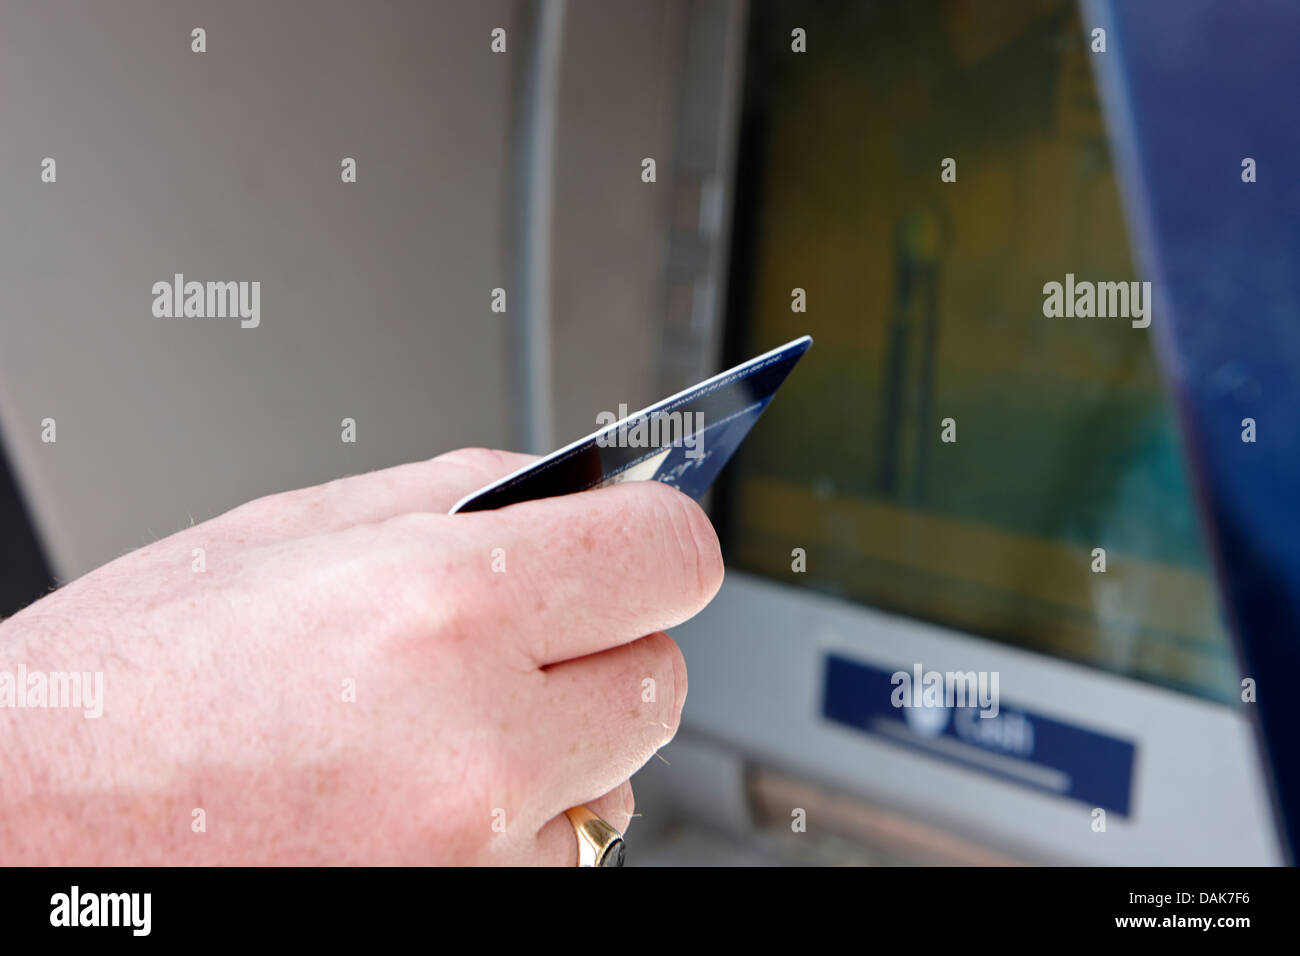 man operating atm cash machine debit card in hand london, england uk Stock Photo